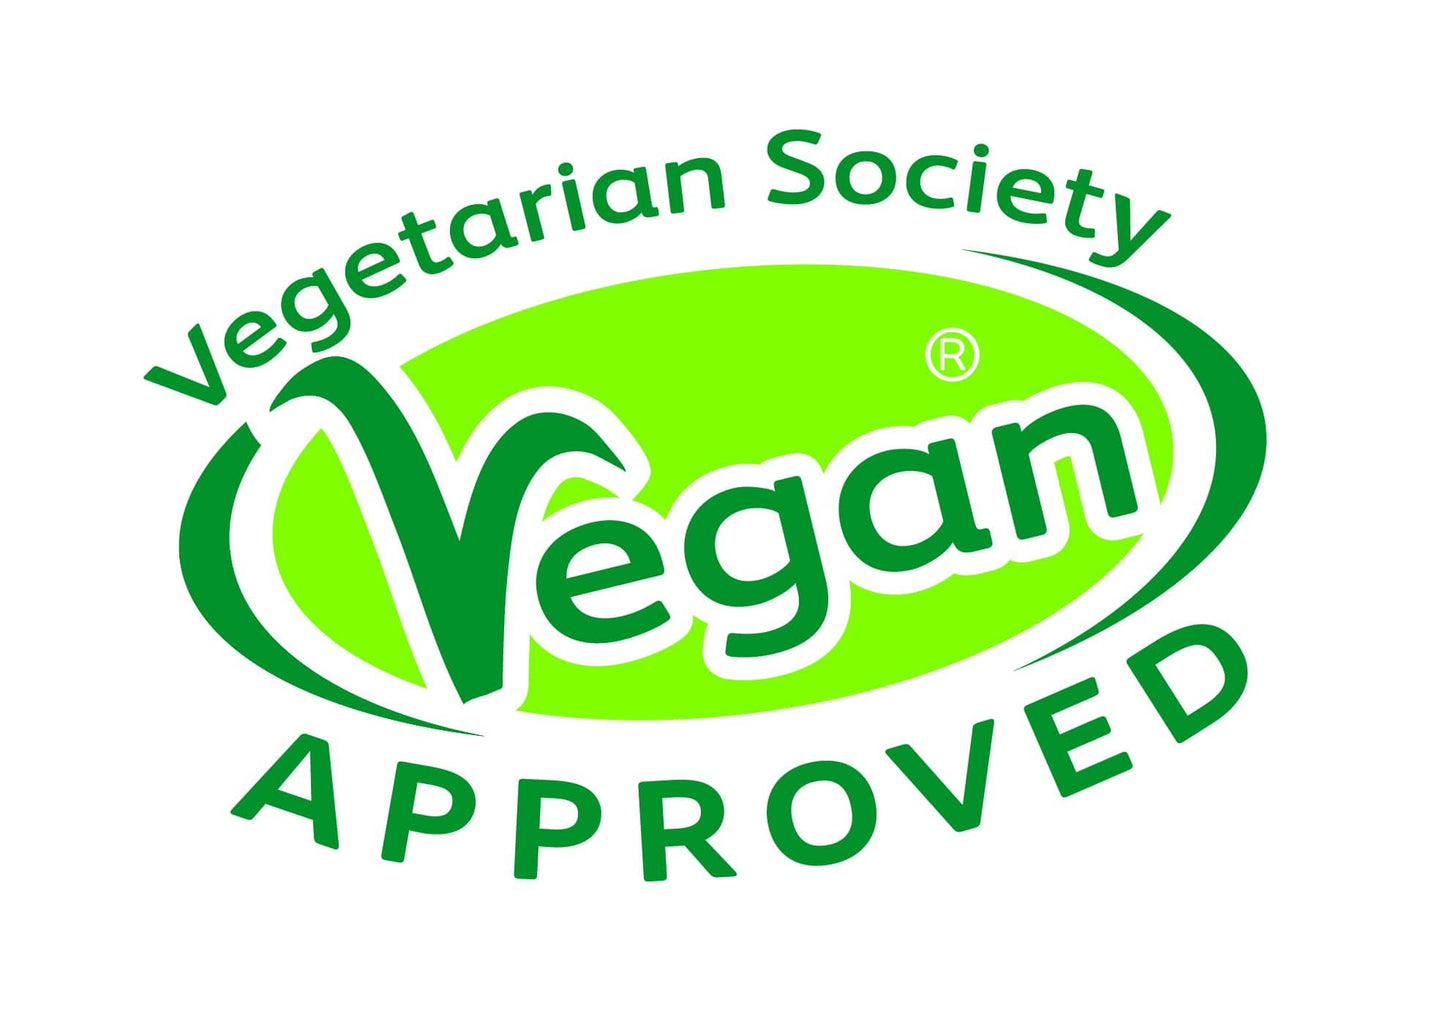 Organic Vegan Turmeric Curcumin & Ginger Supplement with Black Pepper in Plastic Free Biodegradable Tub